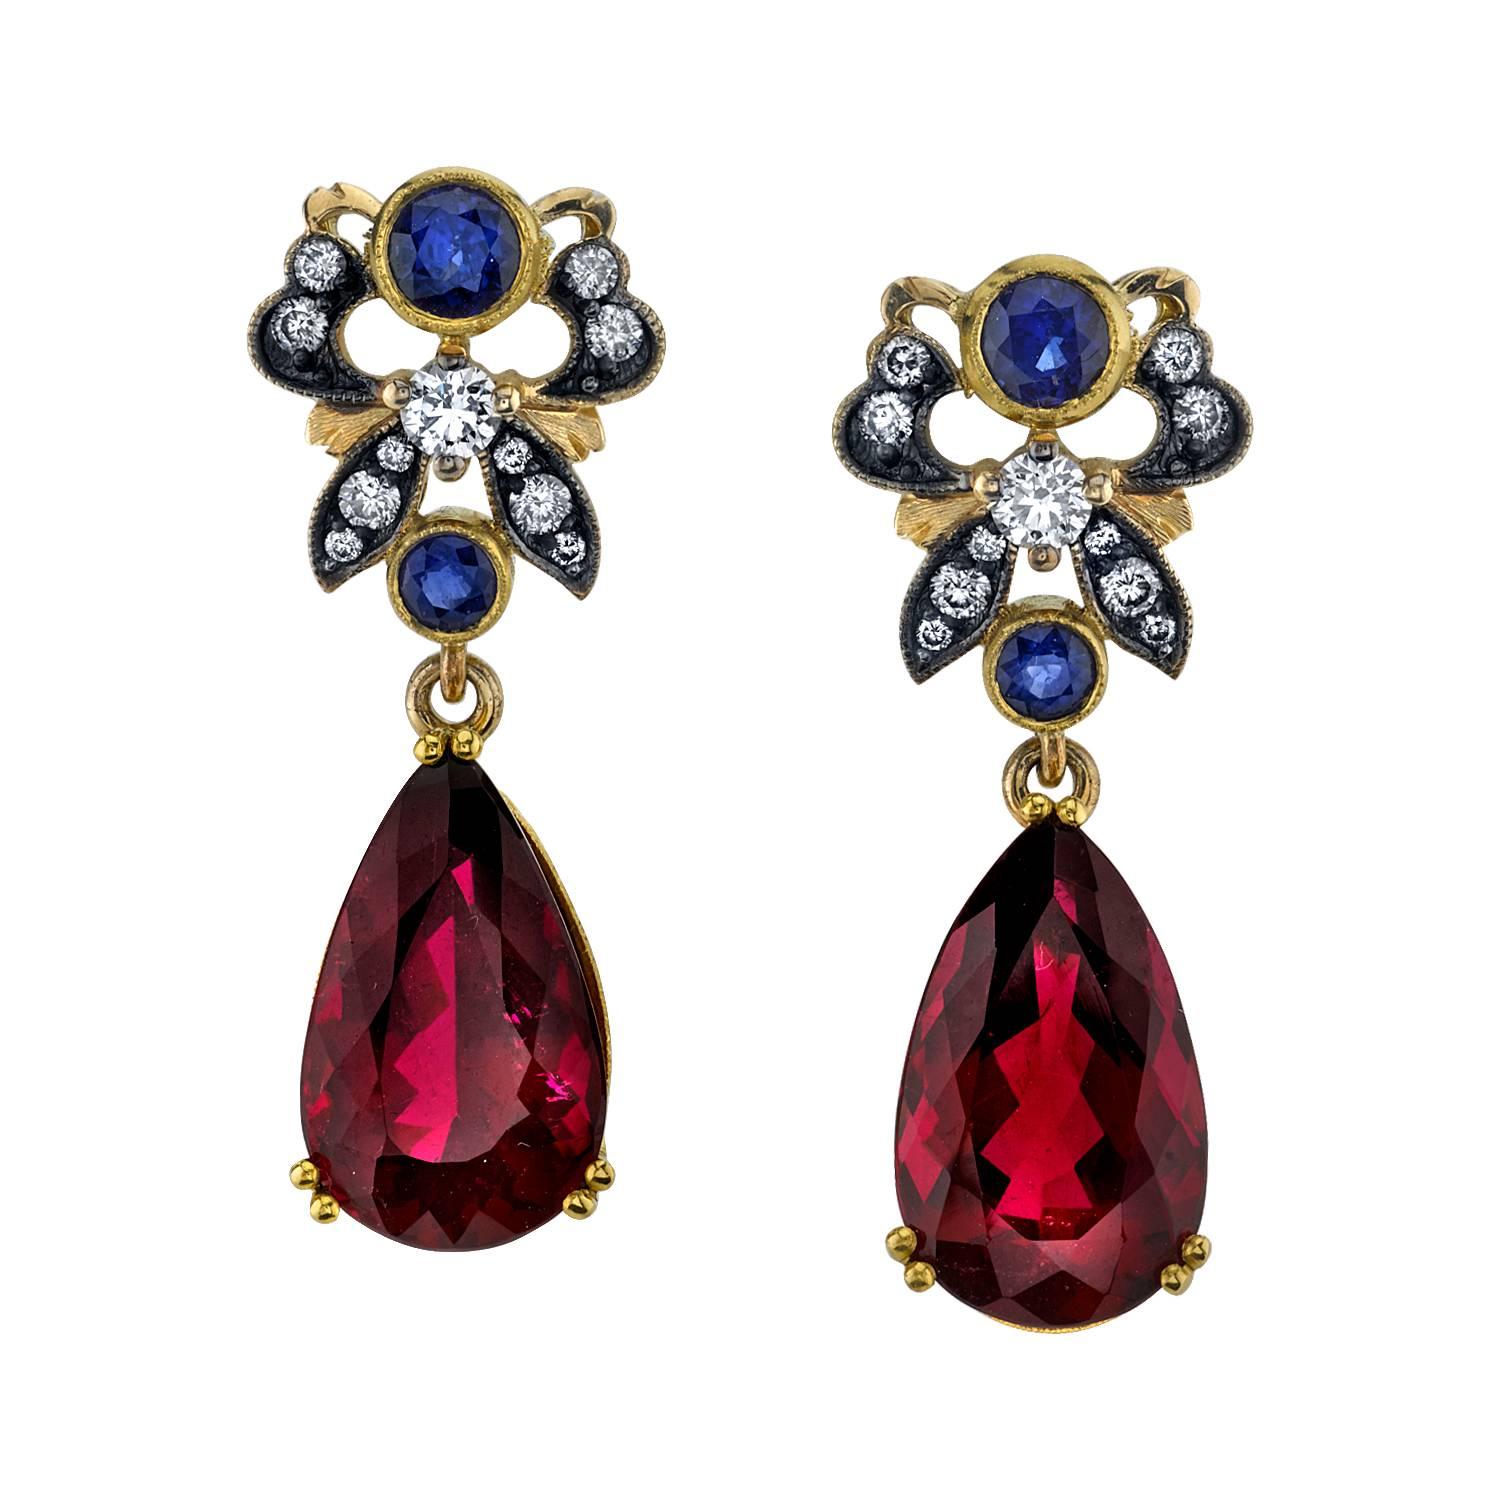 Rubellite Tourmaline, Sapphire and Diamond Earrings, 18k Yellow Gold